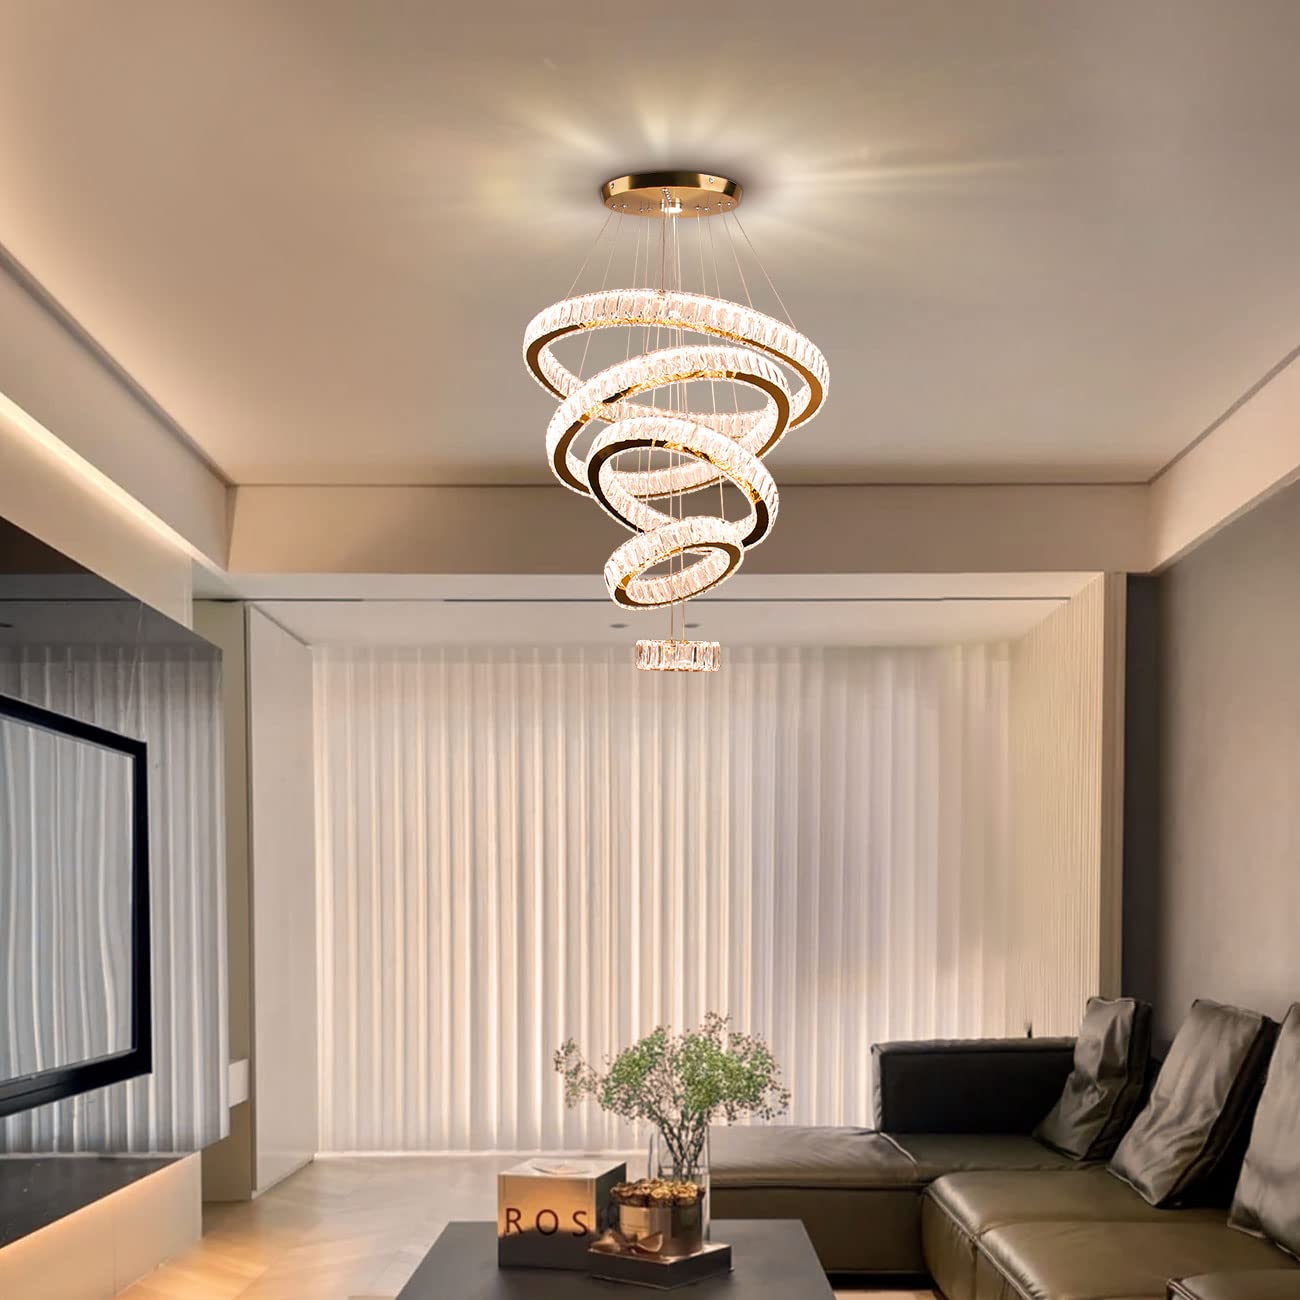 Dixun LED Big Crystal Chandeliers Modern 5 Rings Pendant Light Adjustable Ceiling Light for Bedroom Dinning Room Kitchen (Warm White)